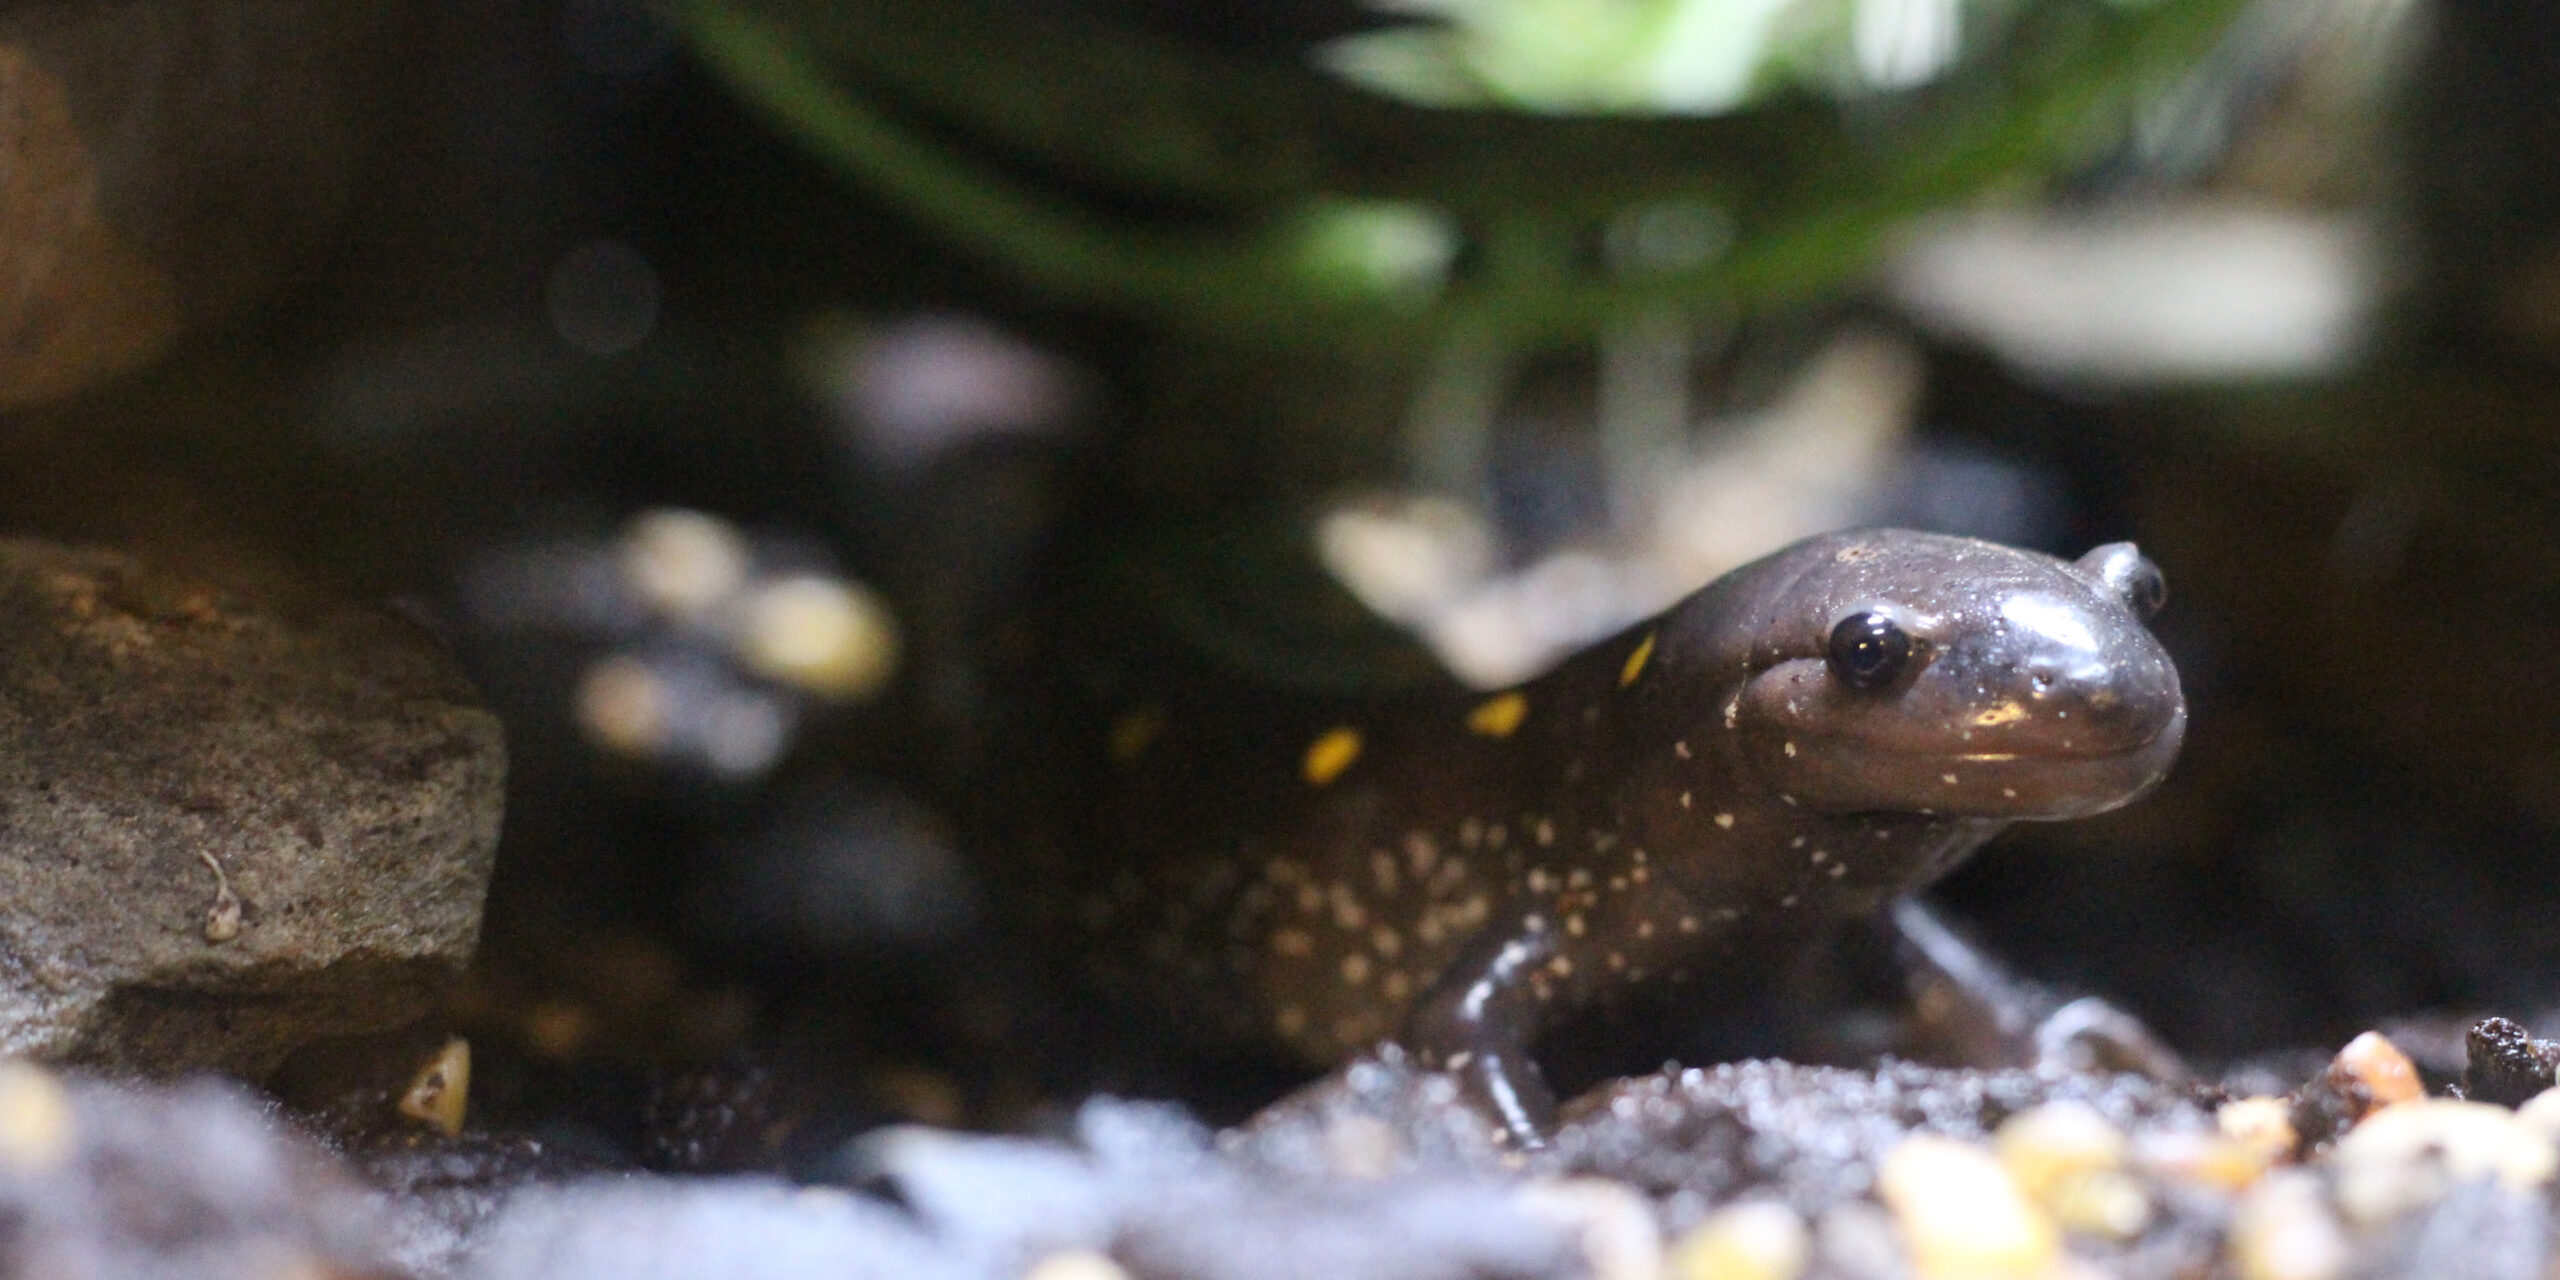 Spotted salamander at Greater Cleveland Aquarium